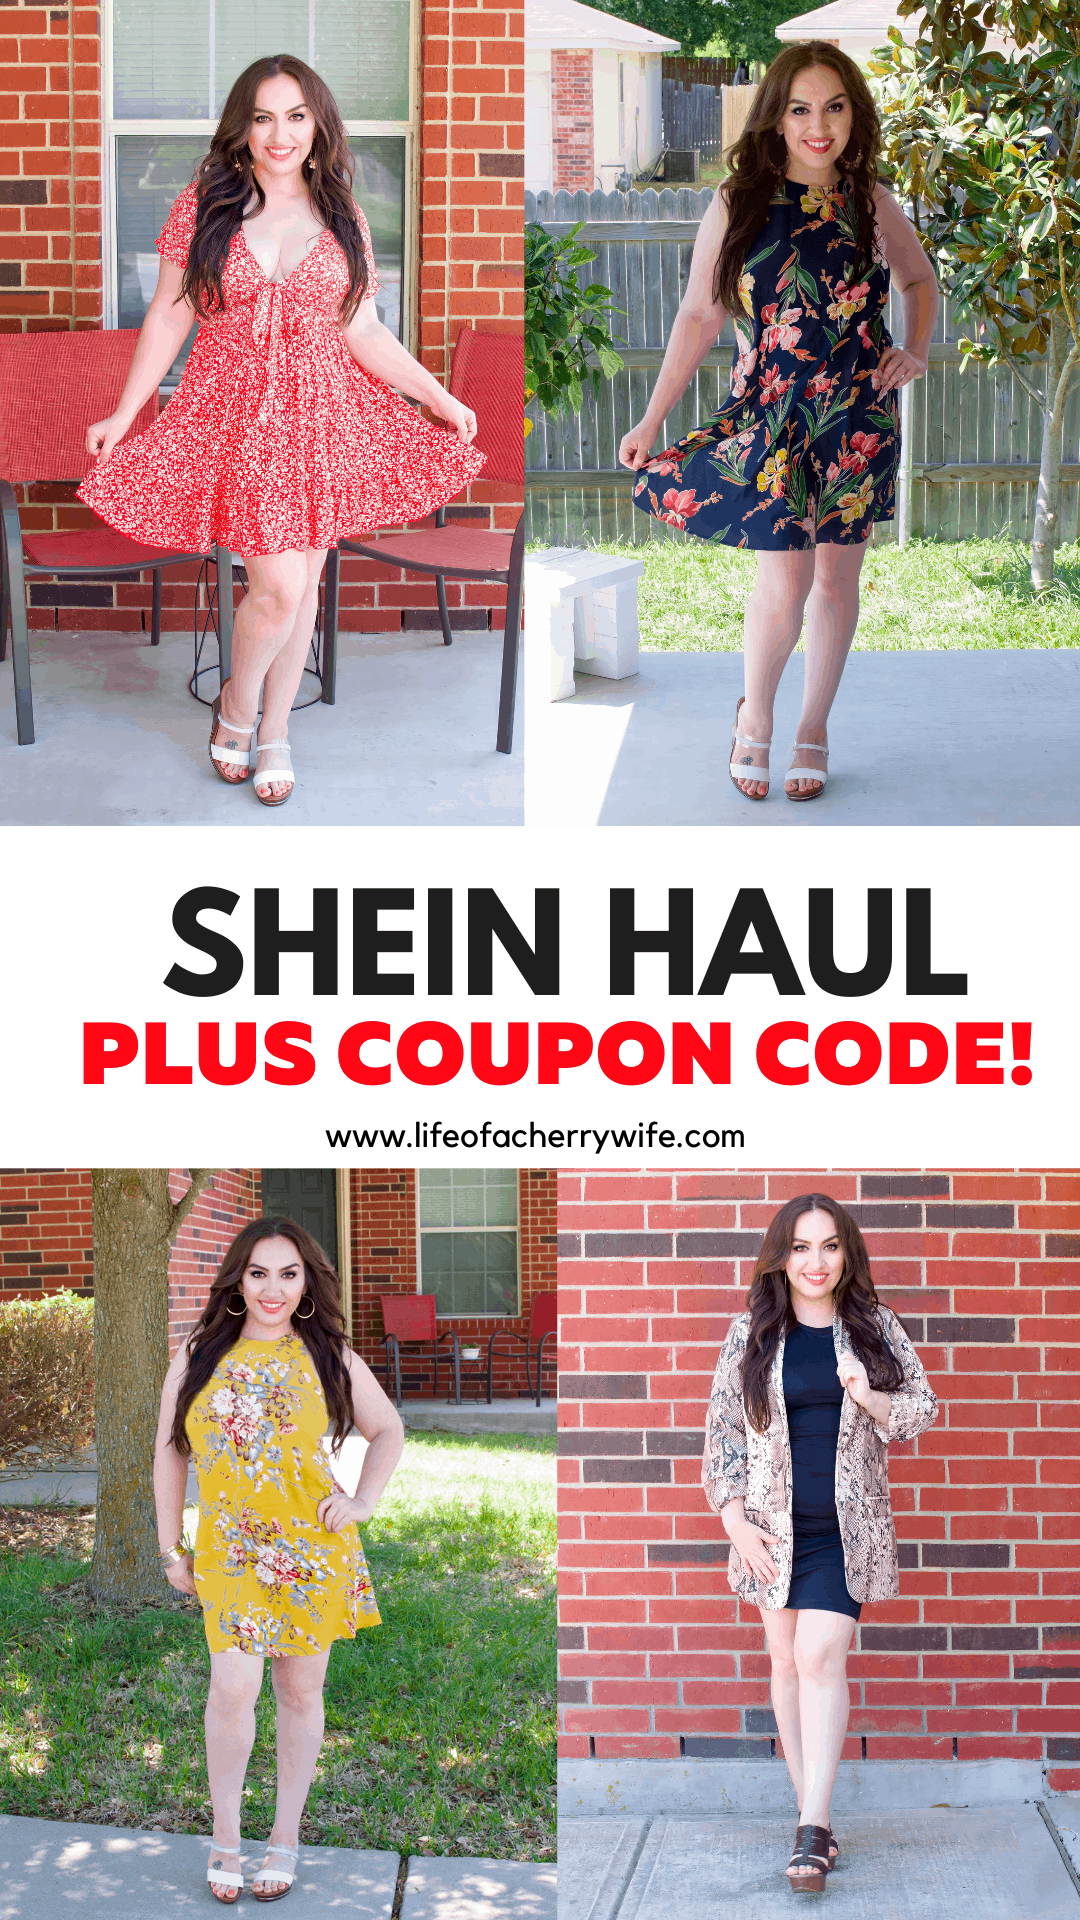 SHEIN HAUL plus coupon code